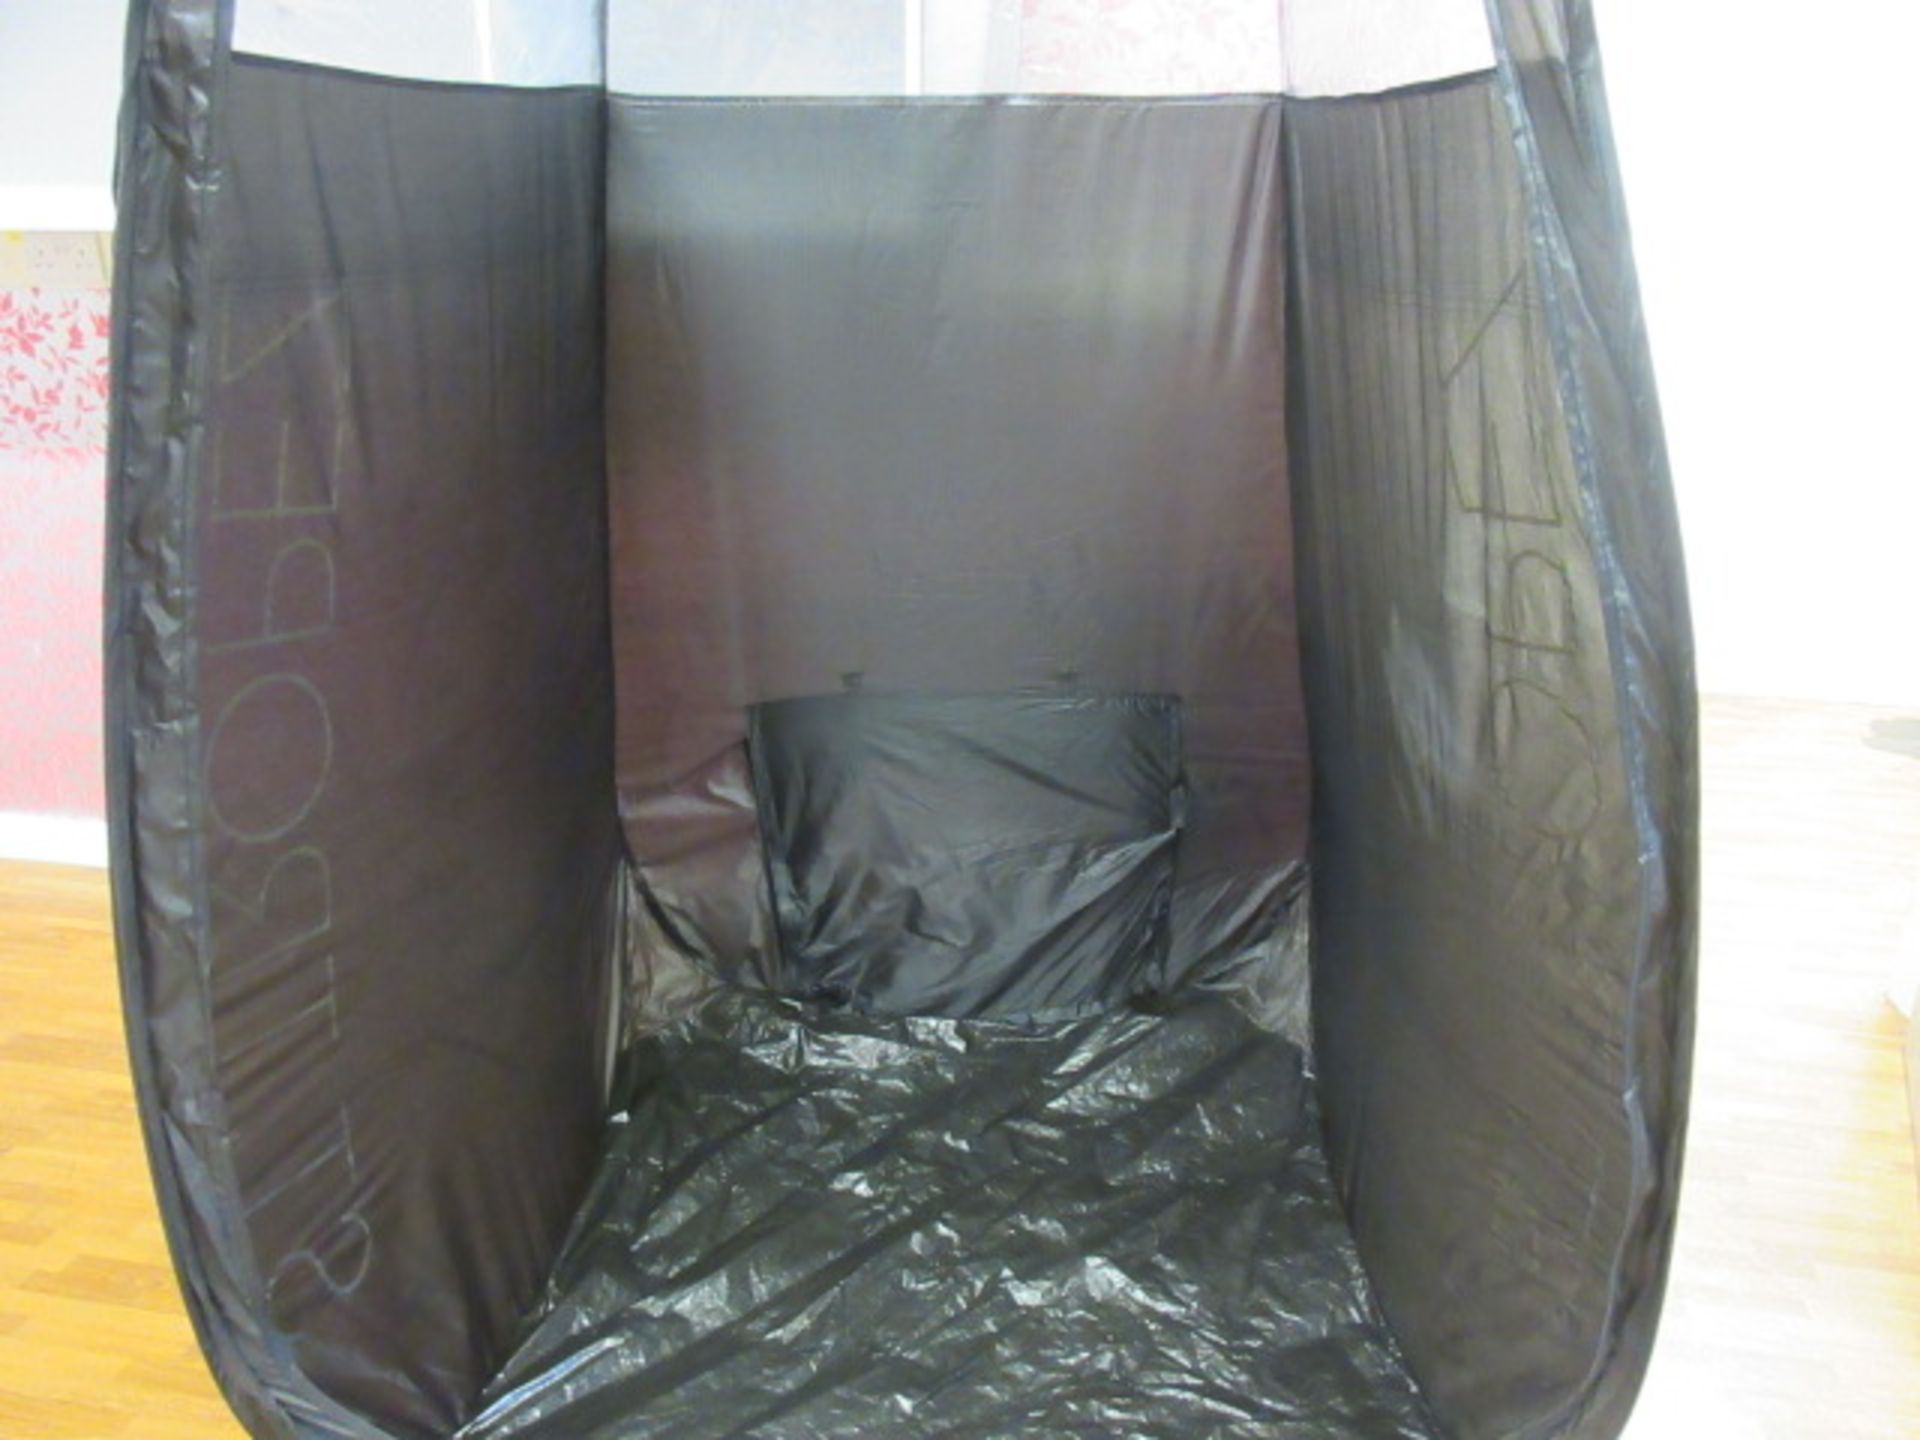 St Tropex Pop Up Spray Tan Tent Holehouse road. Beauty Salon G10 4th floor. - Image 2 of 2